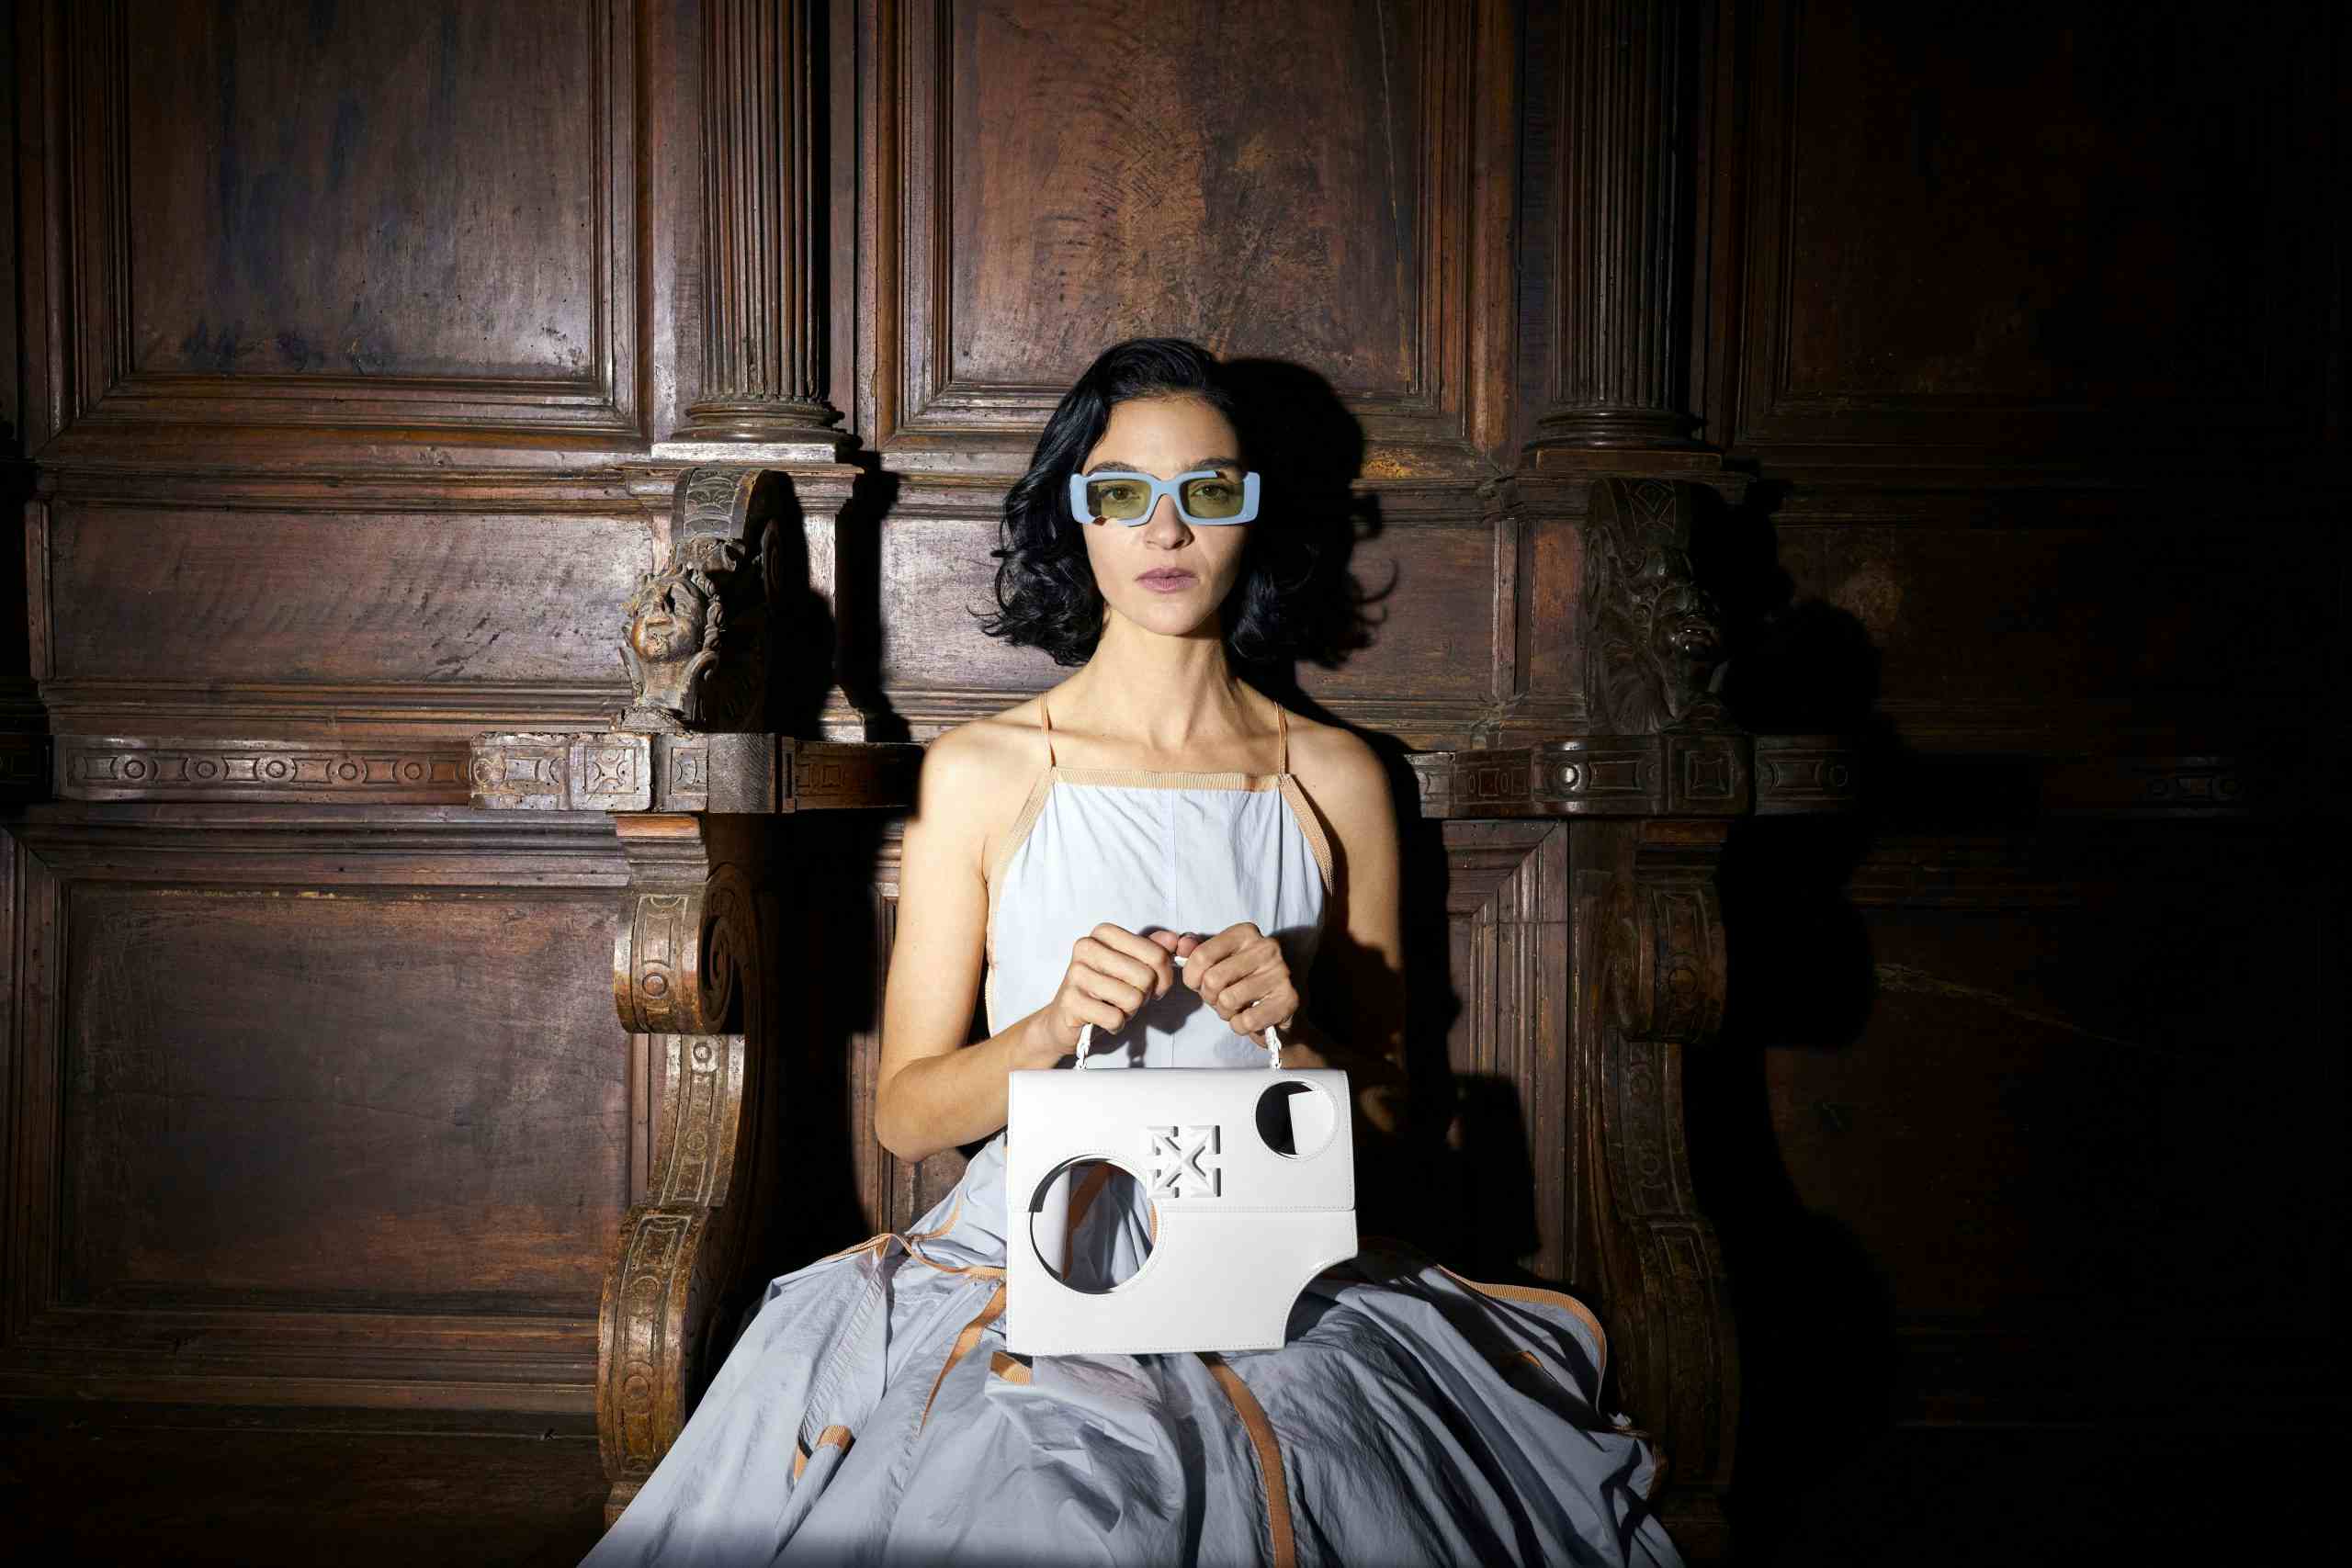 OFF-WHITE - Eyewear/Bags Campaign
Photographer: Juergen Teller
Model: Mariacarla Boscono
Location: Naples, Italy